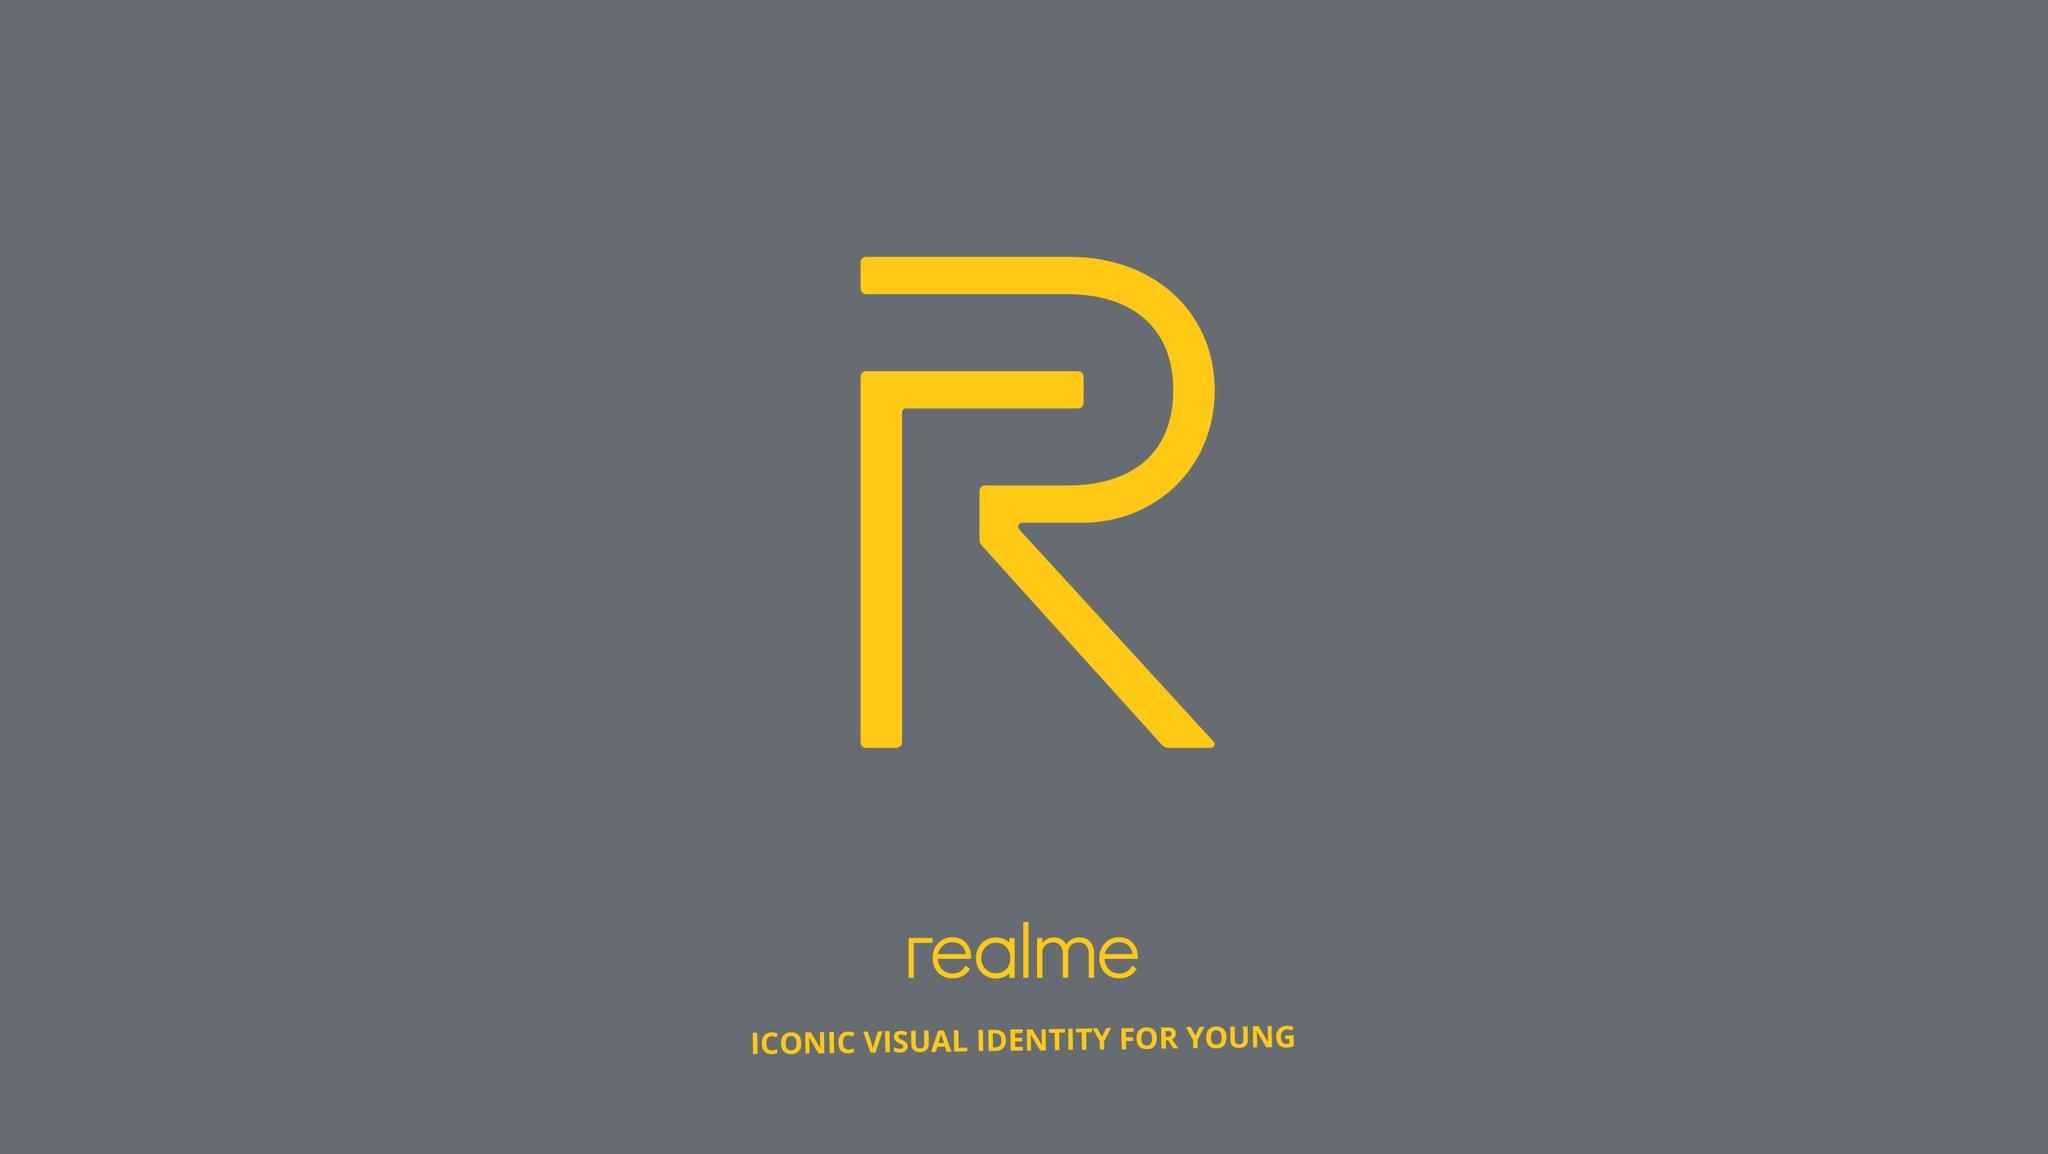 Realme New Logo Introduced Today